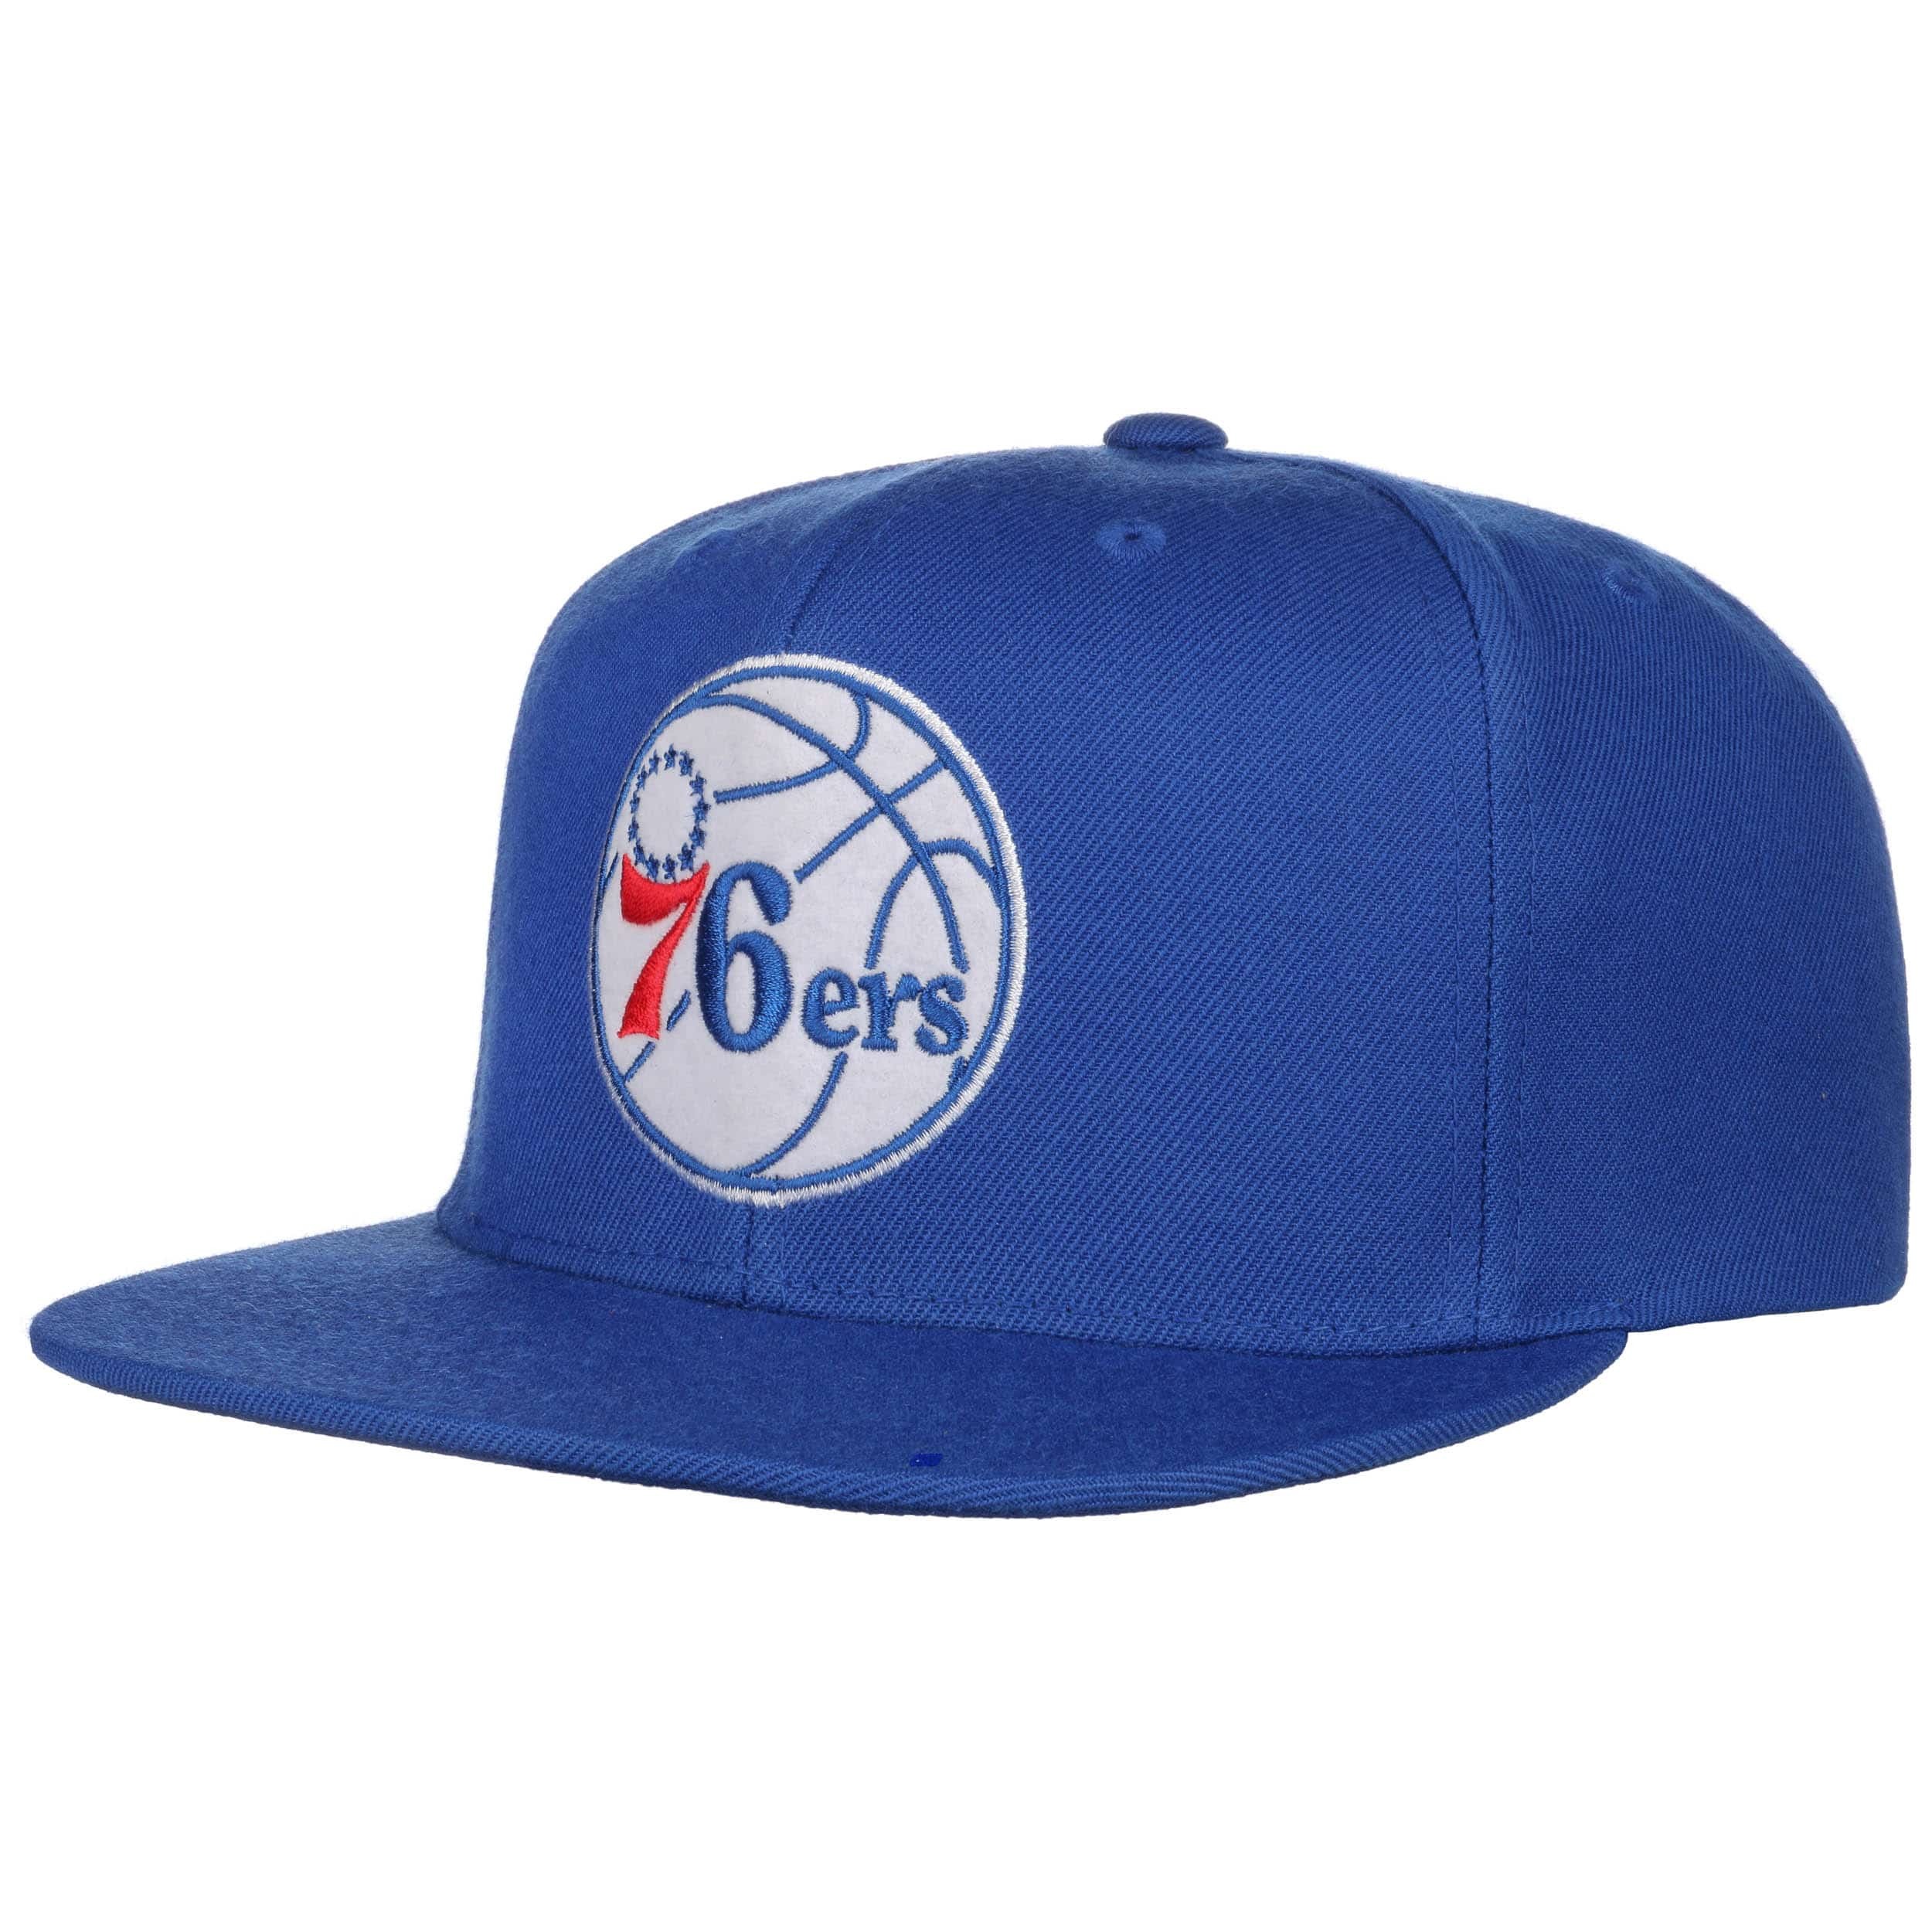 Under Visor 76ers Cap By Mitchell Ness Shop Hats Beanies Caps Online Hatshopping Co Uk